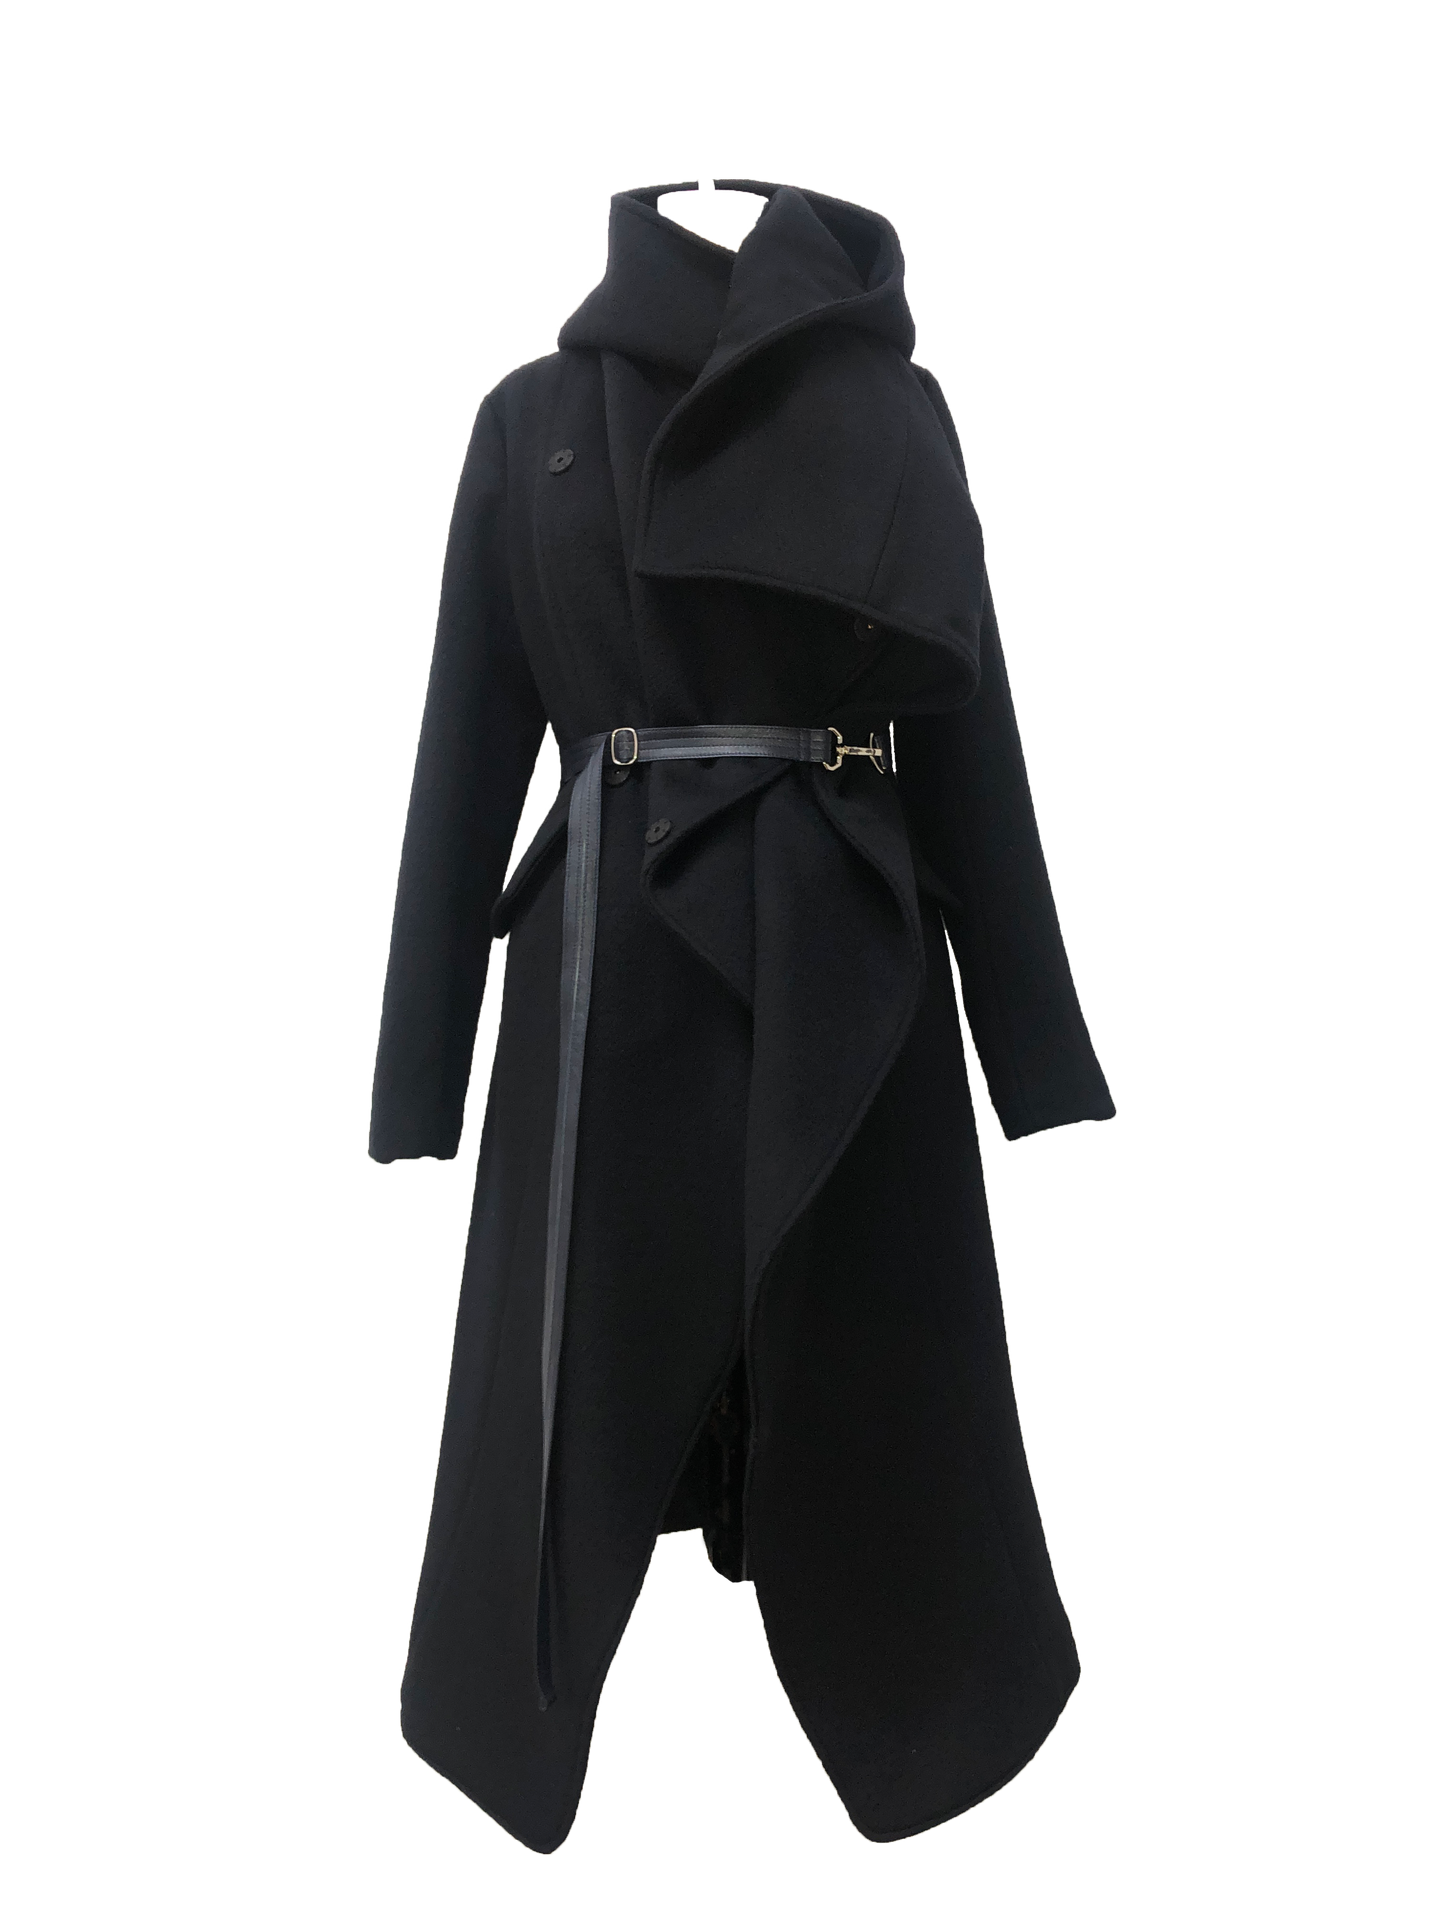 Medium length Black Coat with a hood and adjustable lambskin leather belt alongside metal clip closures 